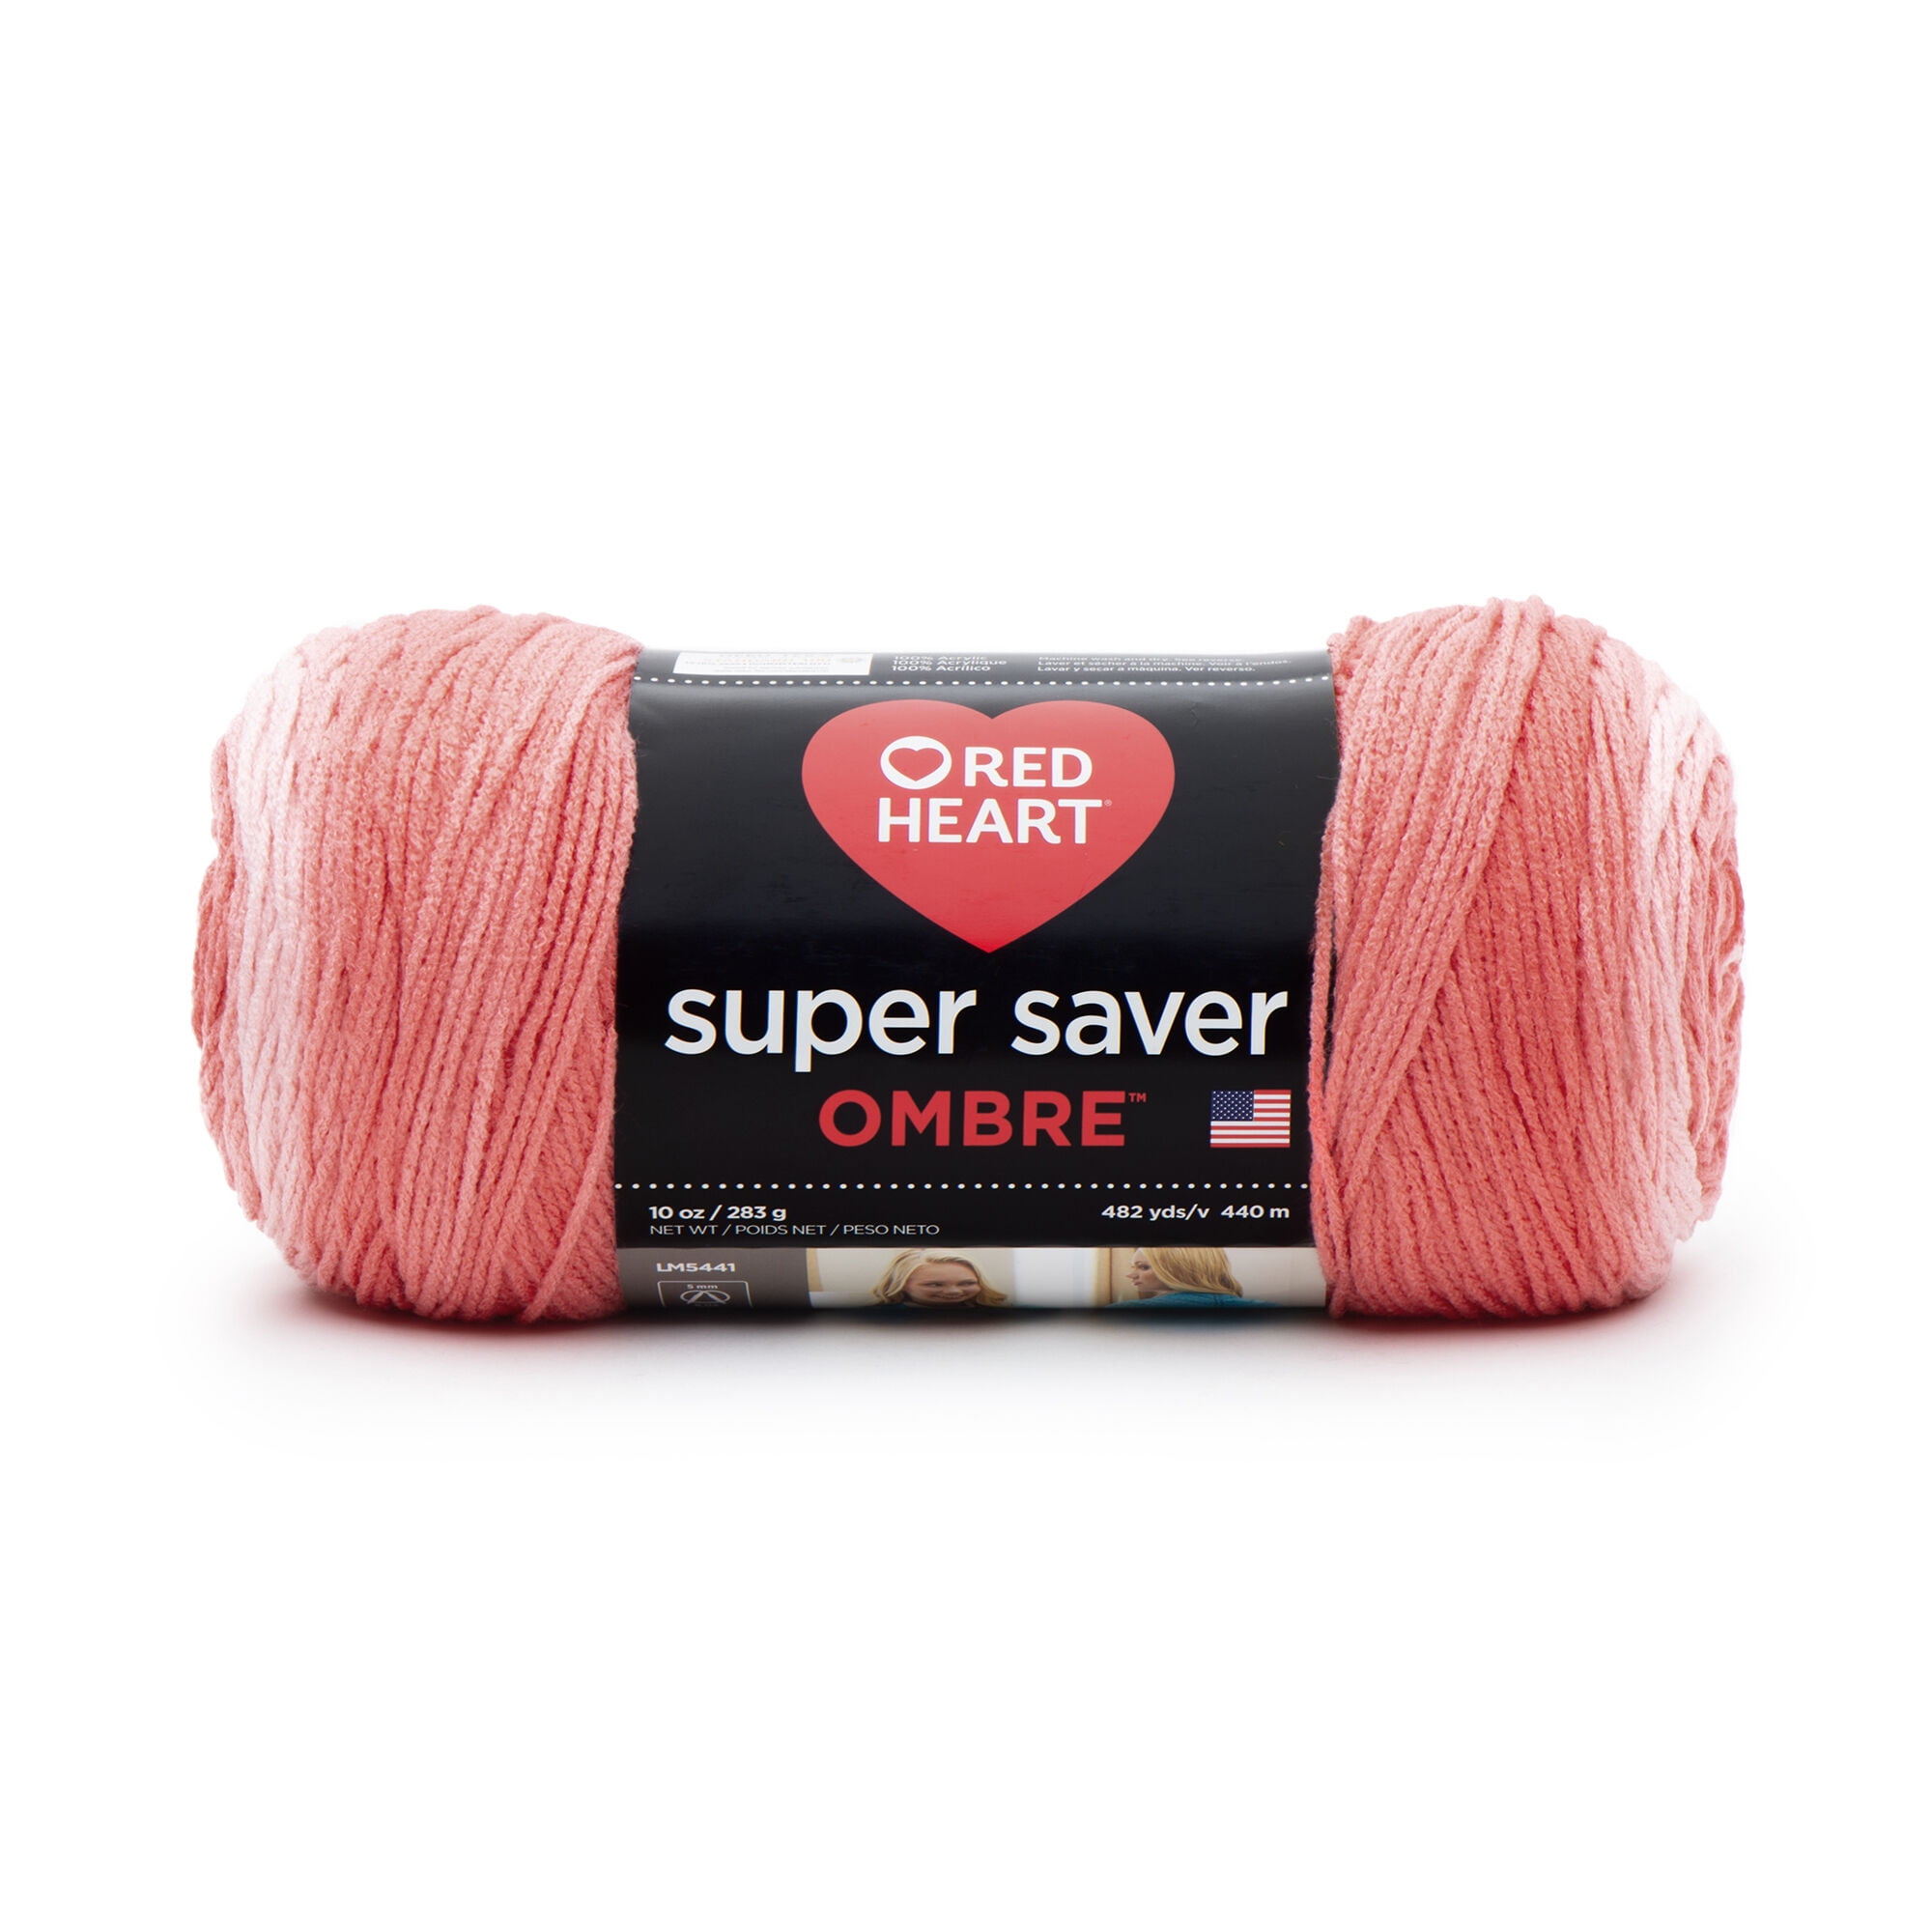 Red Heart Super Saver Ombre Medium Acrylic Sea Coral Yarn, 482 yd